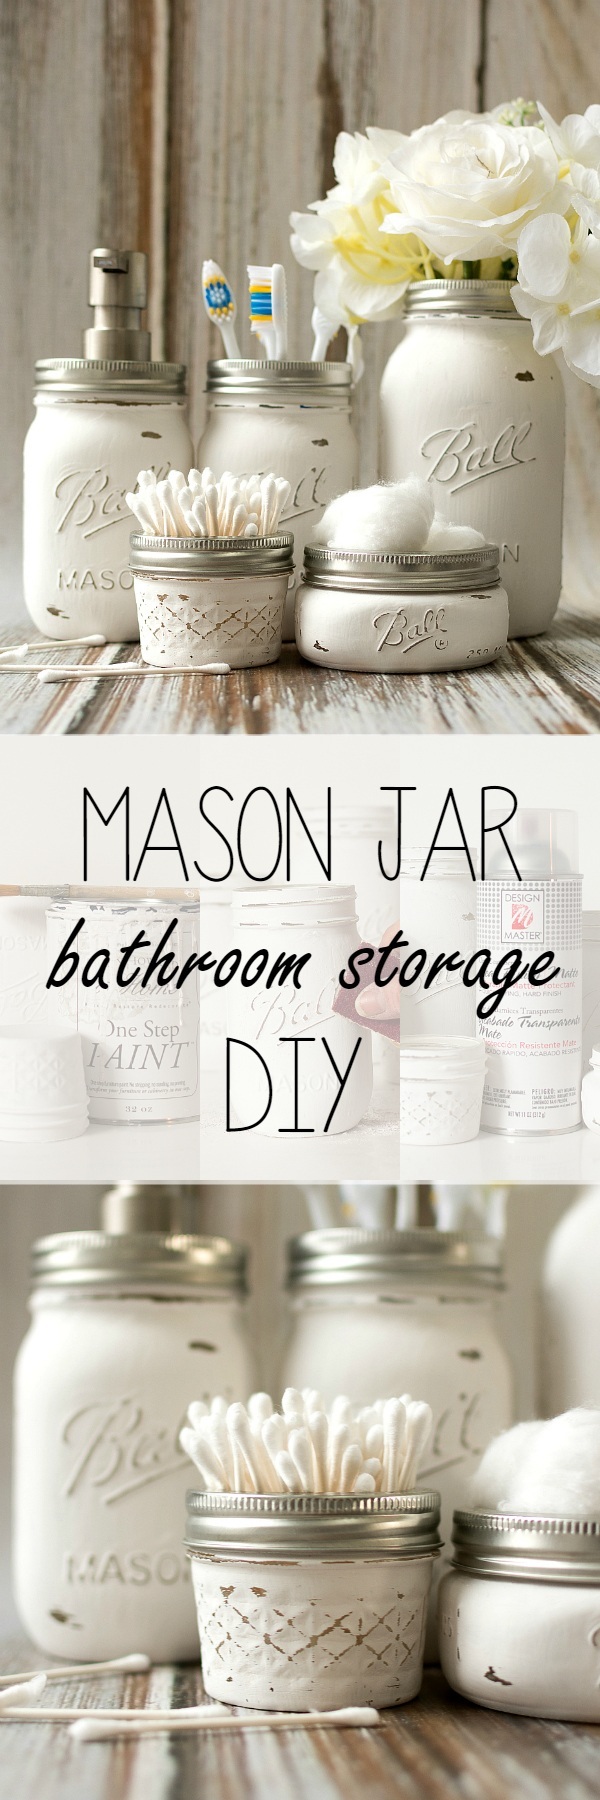 Mason Jar Bathroom Storage & Accessories